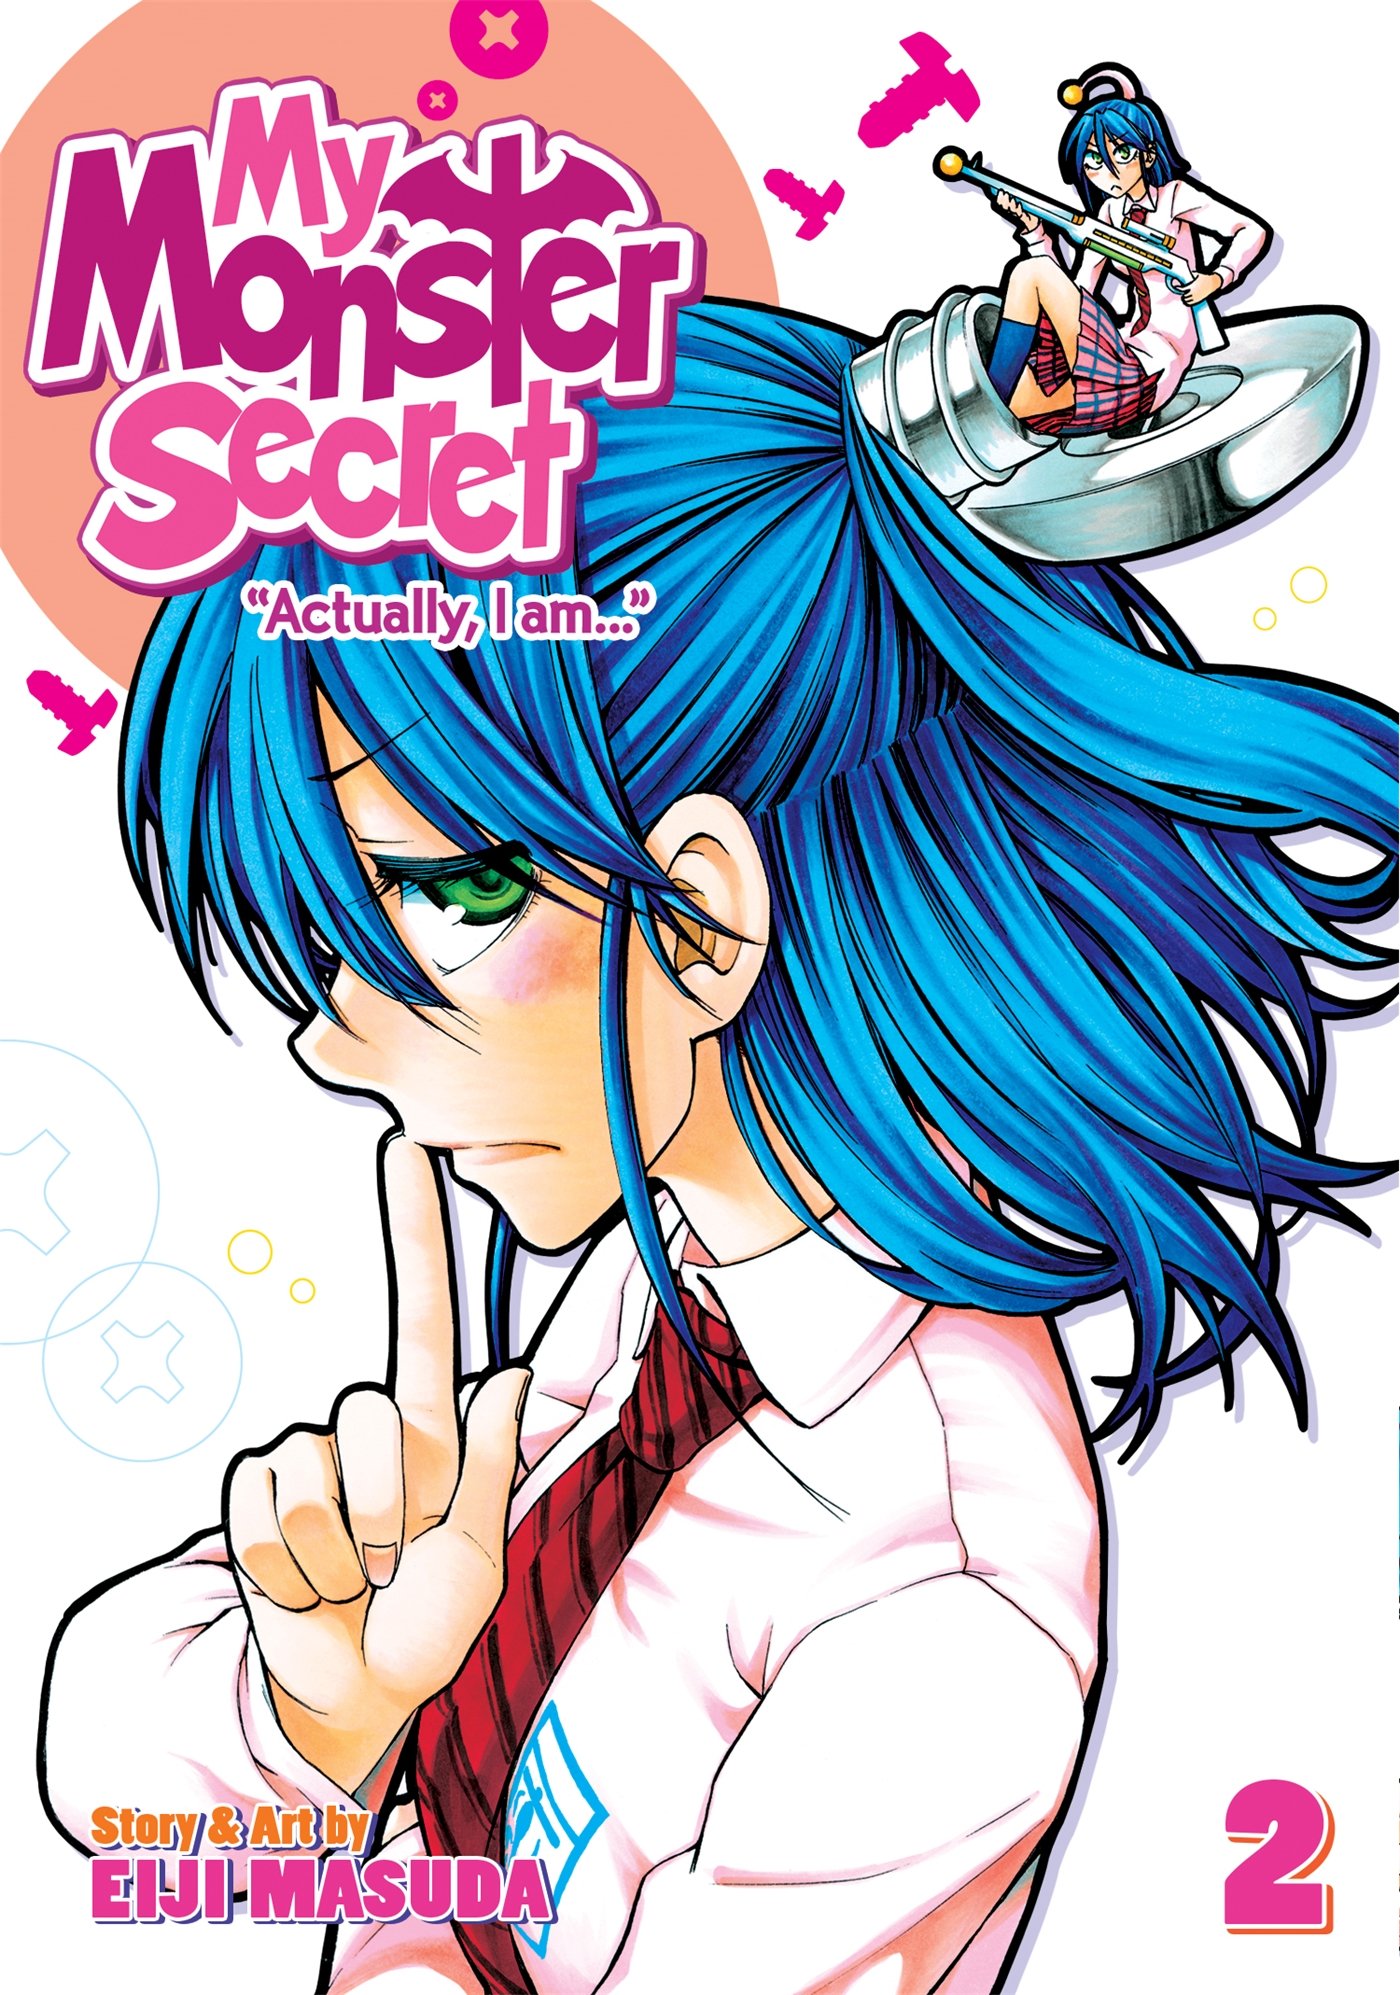 Crunchyroll Manga - A Review of the New Crunchyroll Manga Section -  AstroNerdBoy's Anime & Manga Blog